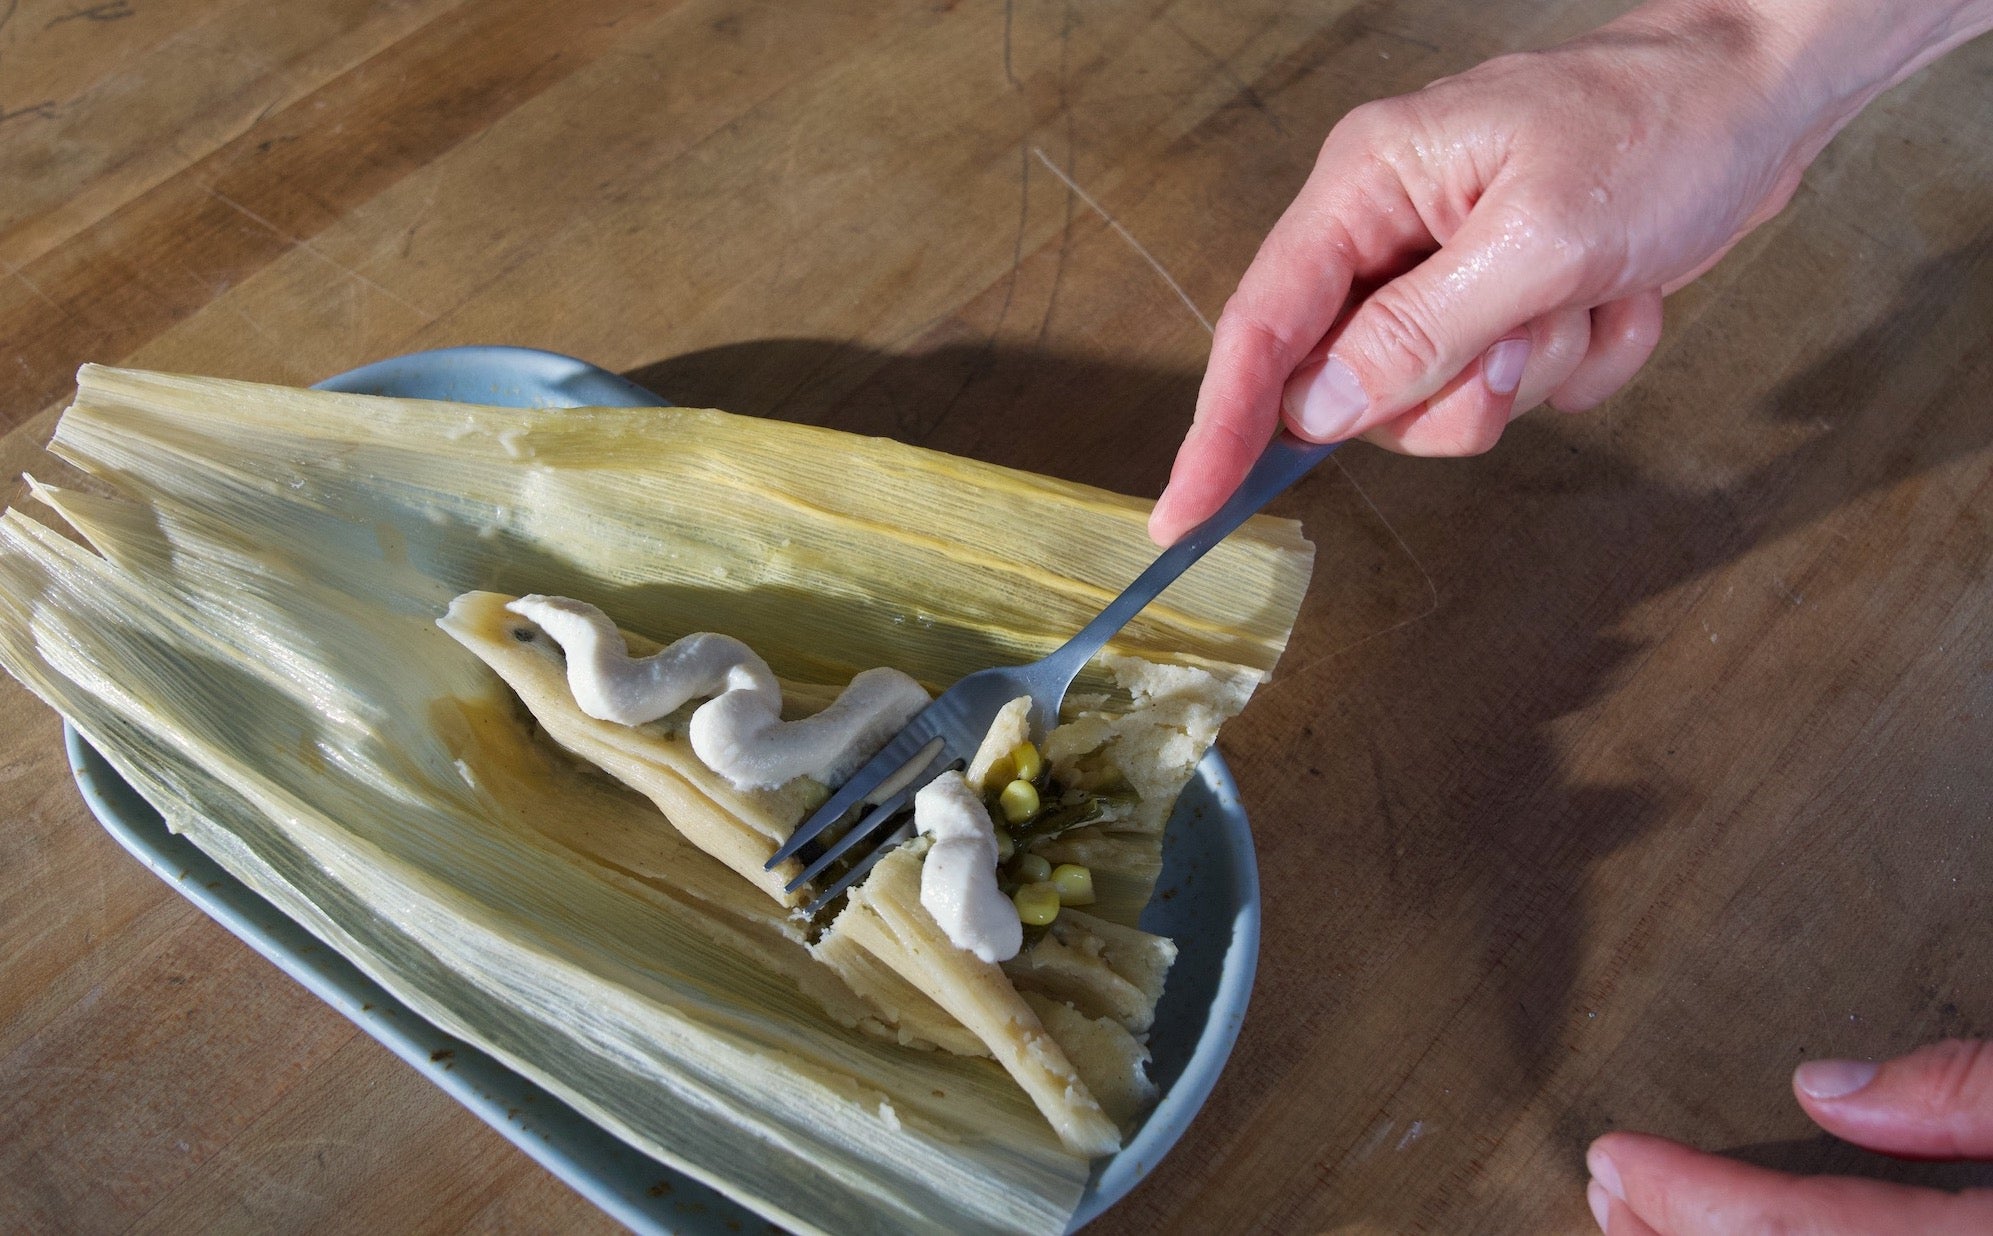 Vegan tamales: rajas con elote with cashew crema